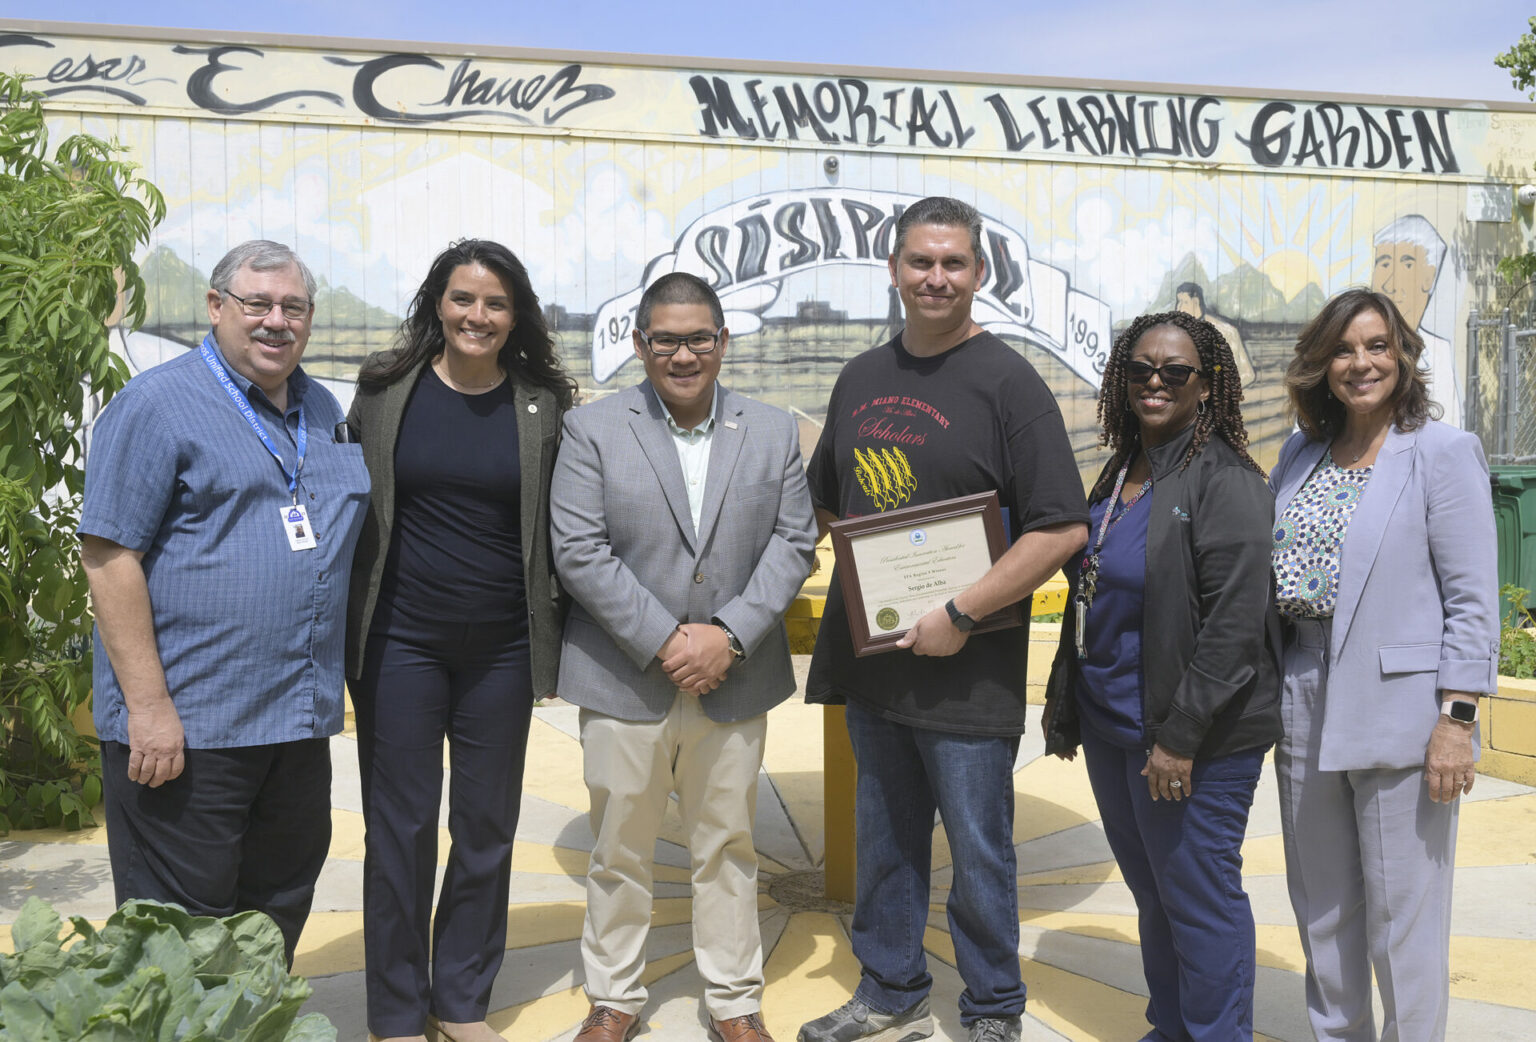 Los Banos elementary school teacher is honored by US EPA The Westside